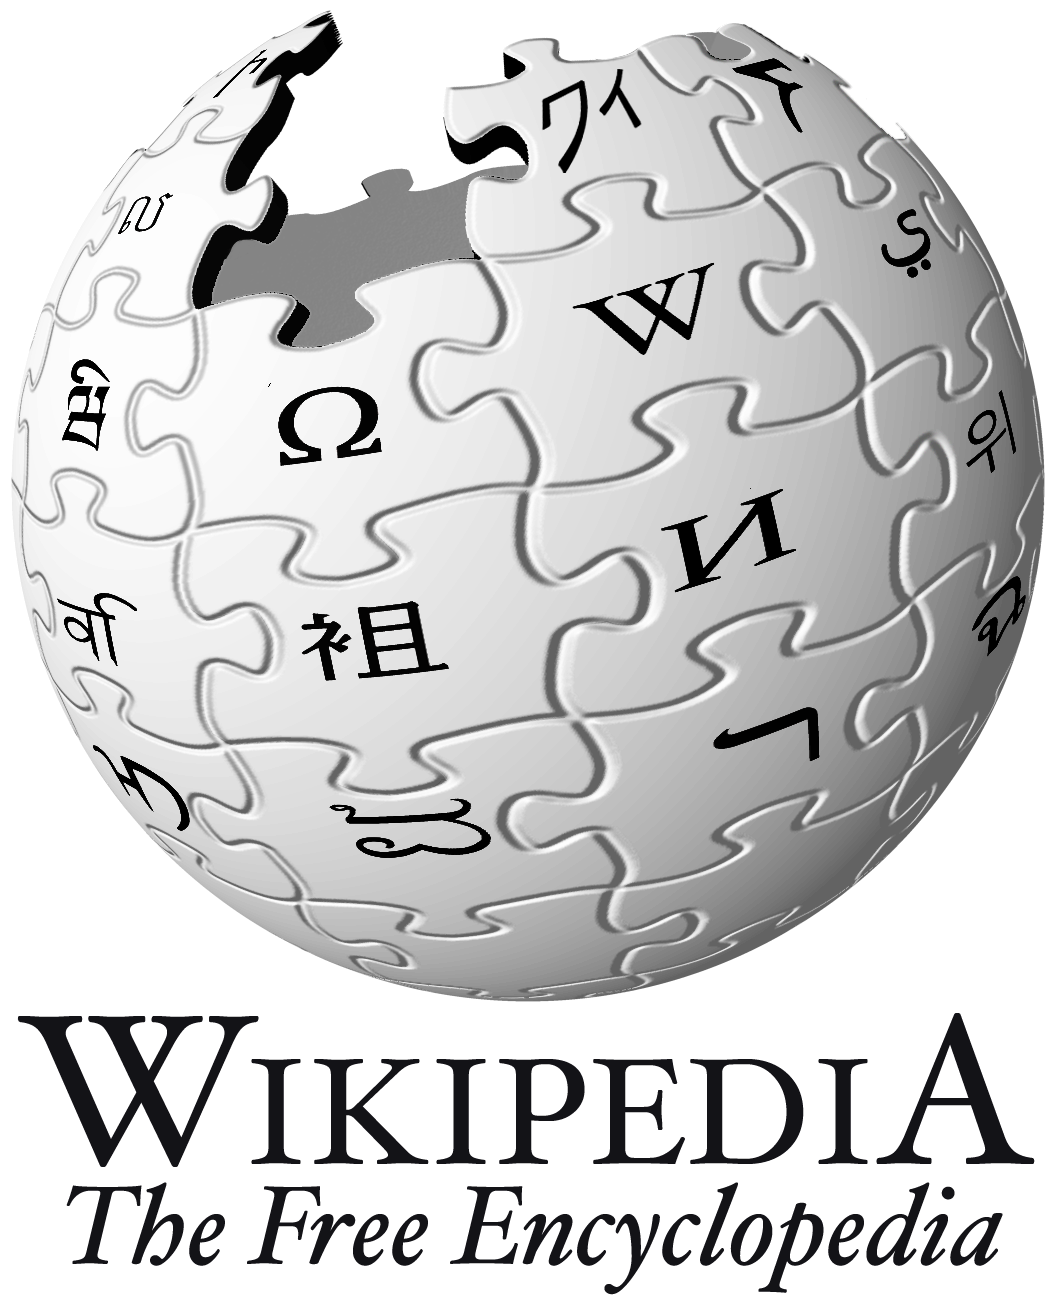 Wikipedia-logo.svg.png